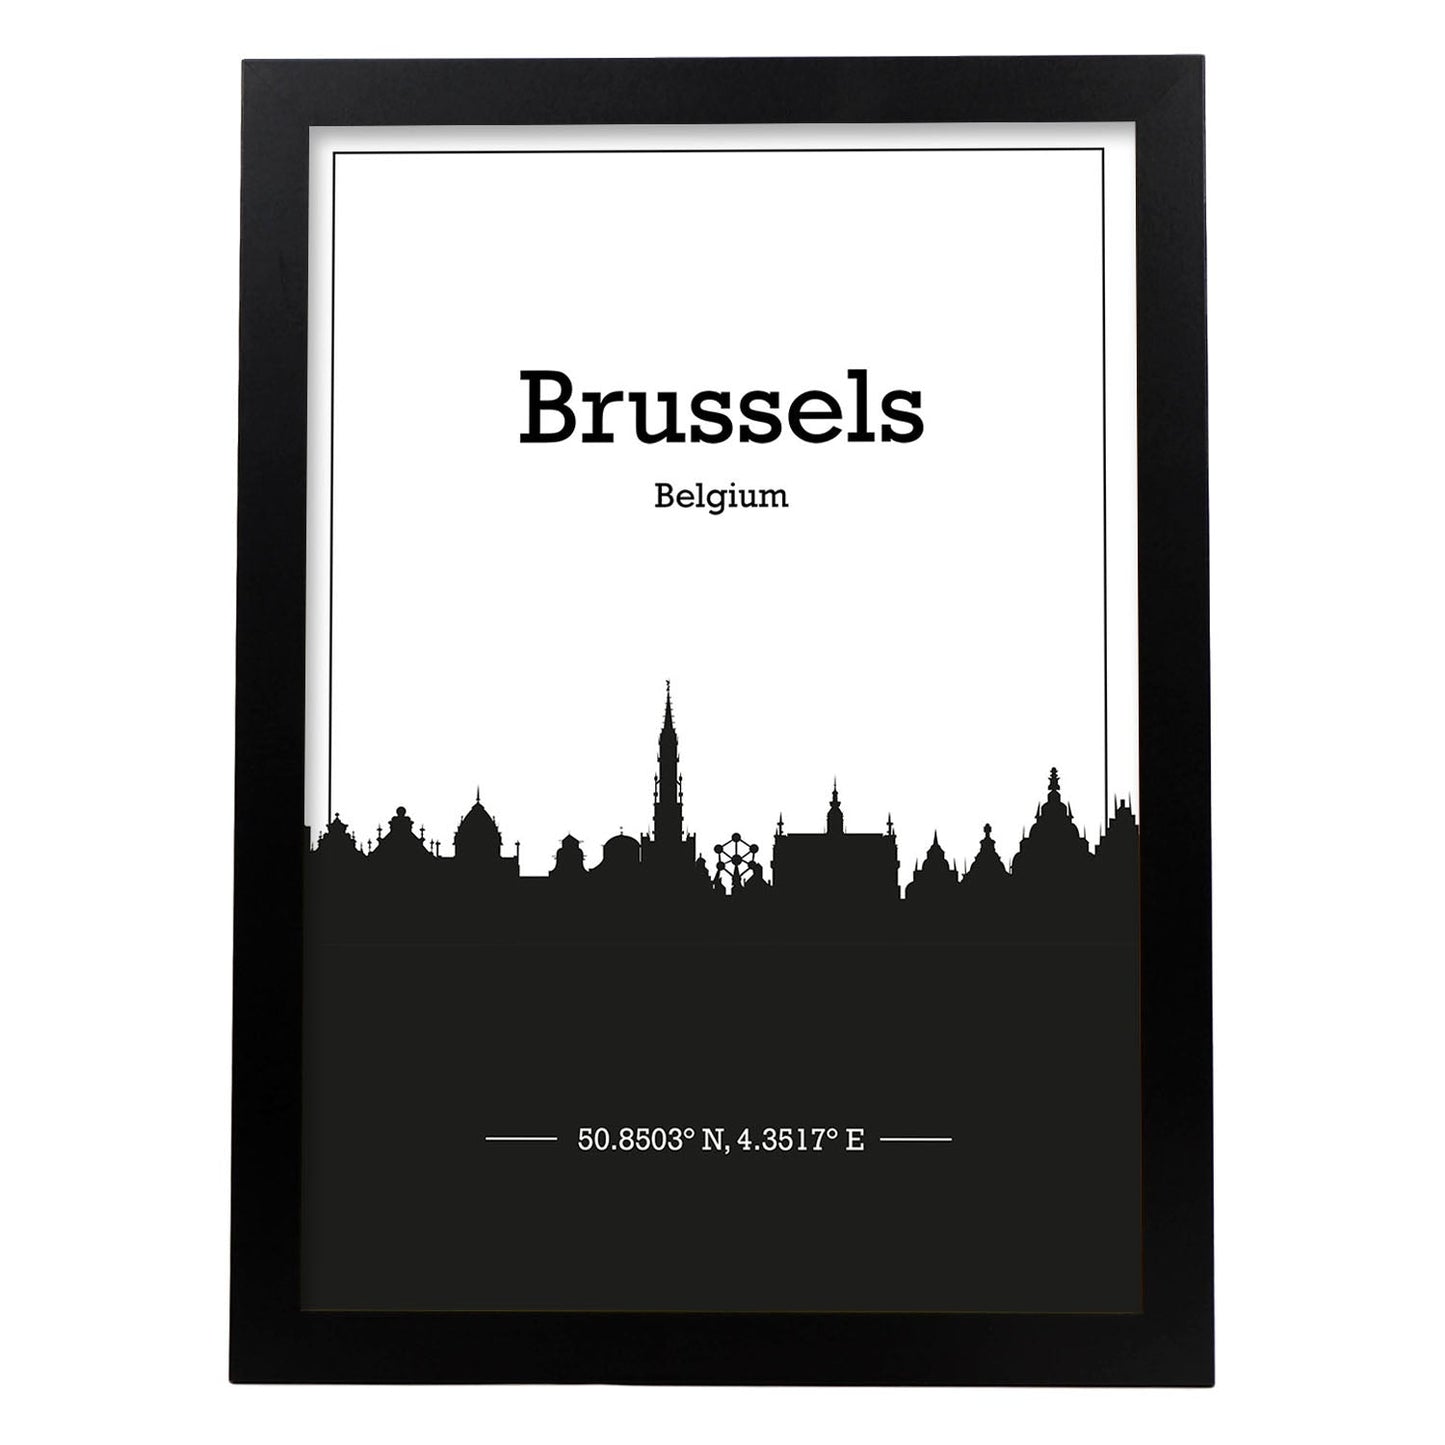 Poster con mapa de Brussels - Belgica. Láminas con Skyline de ciudades de Europa con sombra negra.-Artwork-Nacnic-A3-Marco Negro-Nacnic Estudio SL